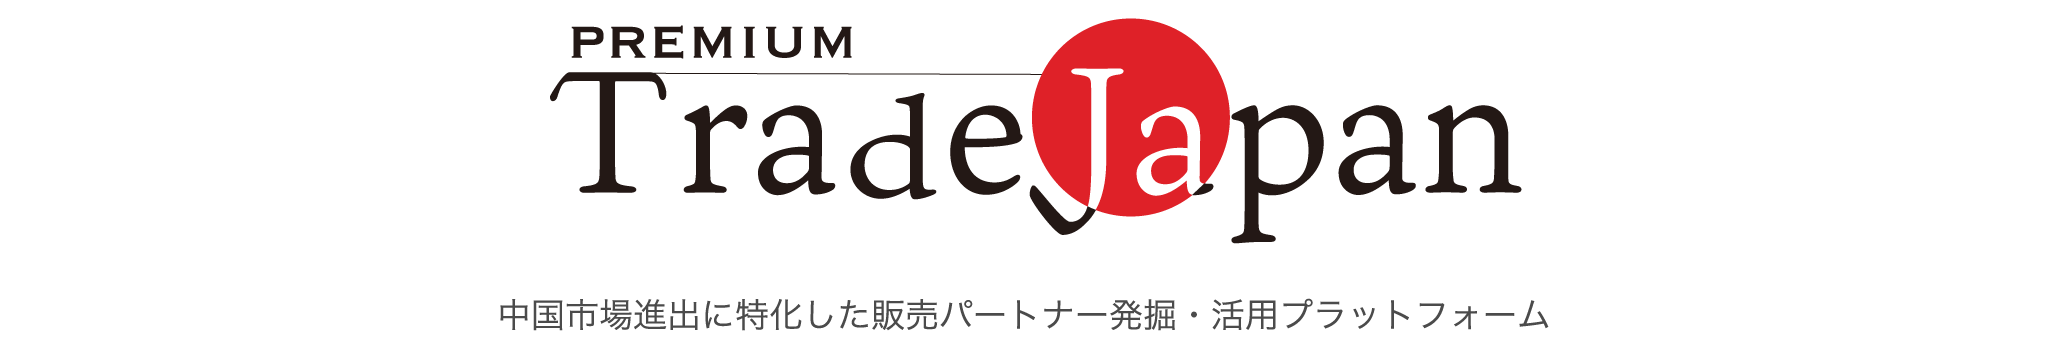 PREMIUM Trade Japan